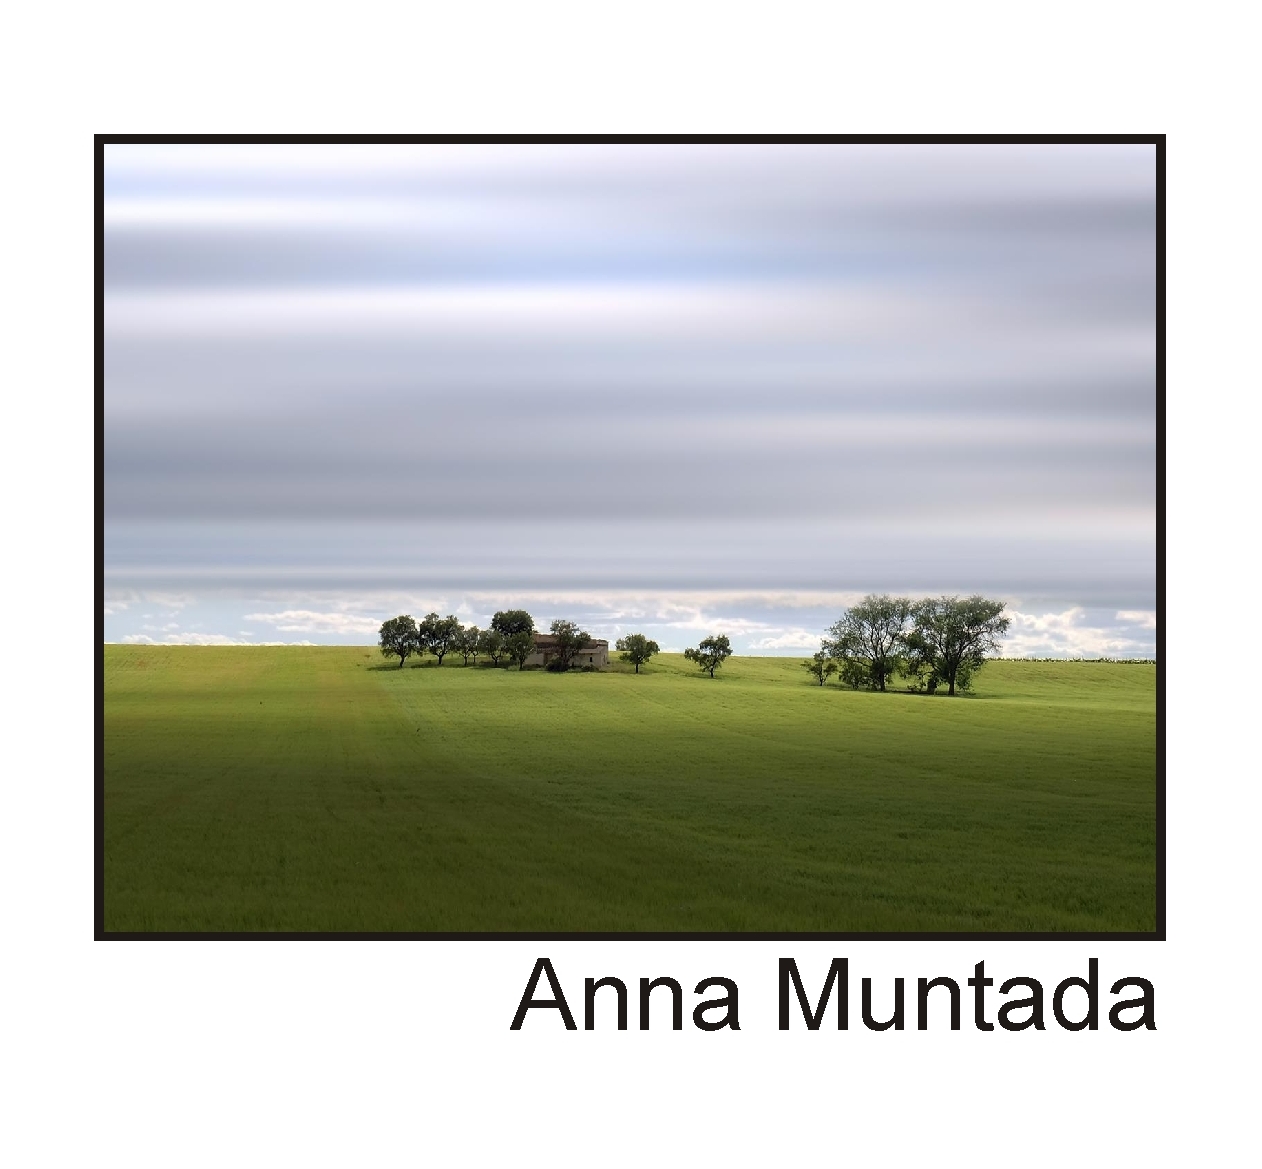  Anna Muntada 2021